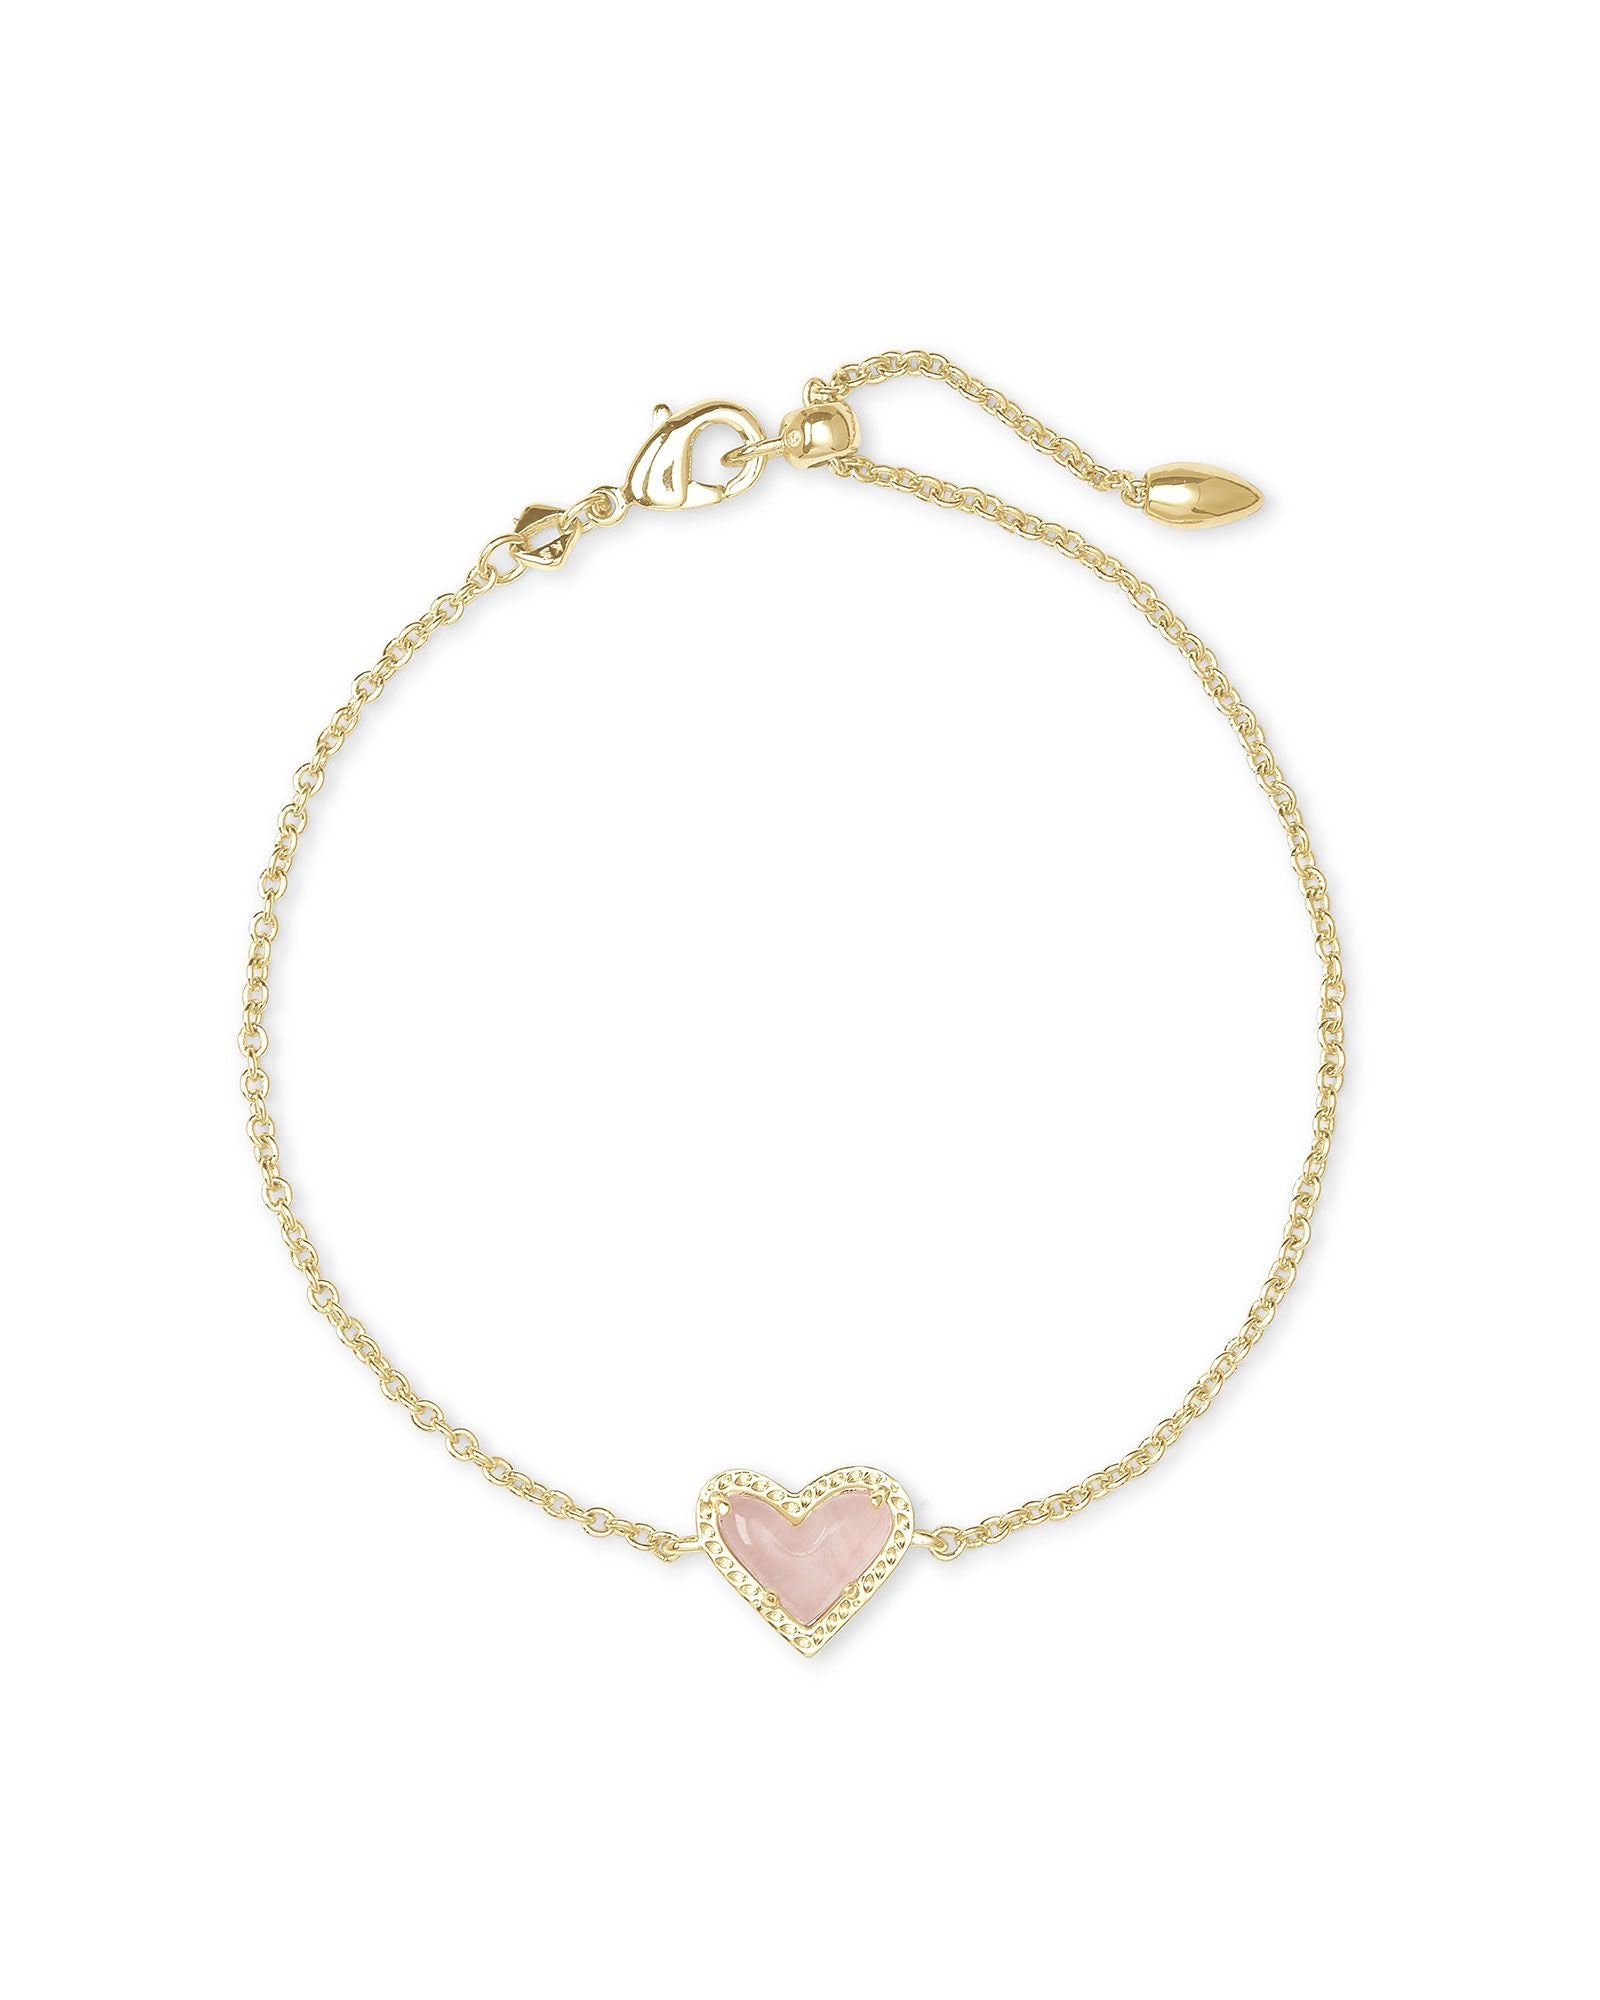 Ari Heart Bracelet in Gold Rose Quartz